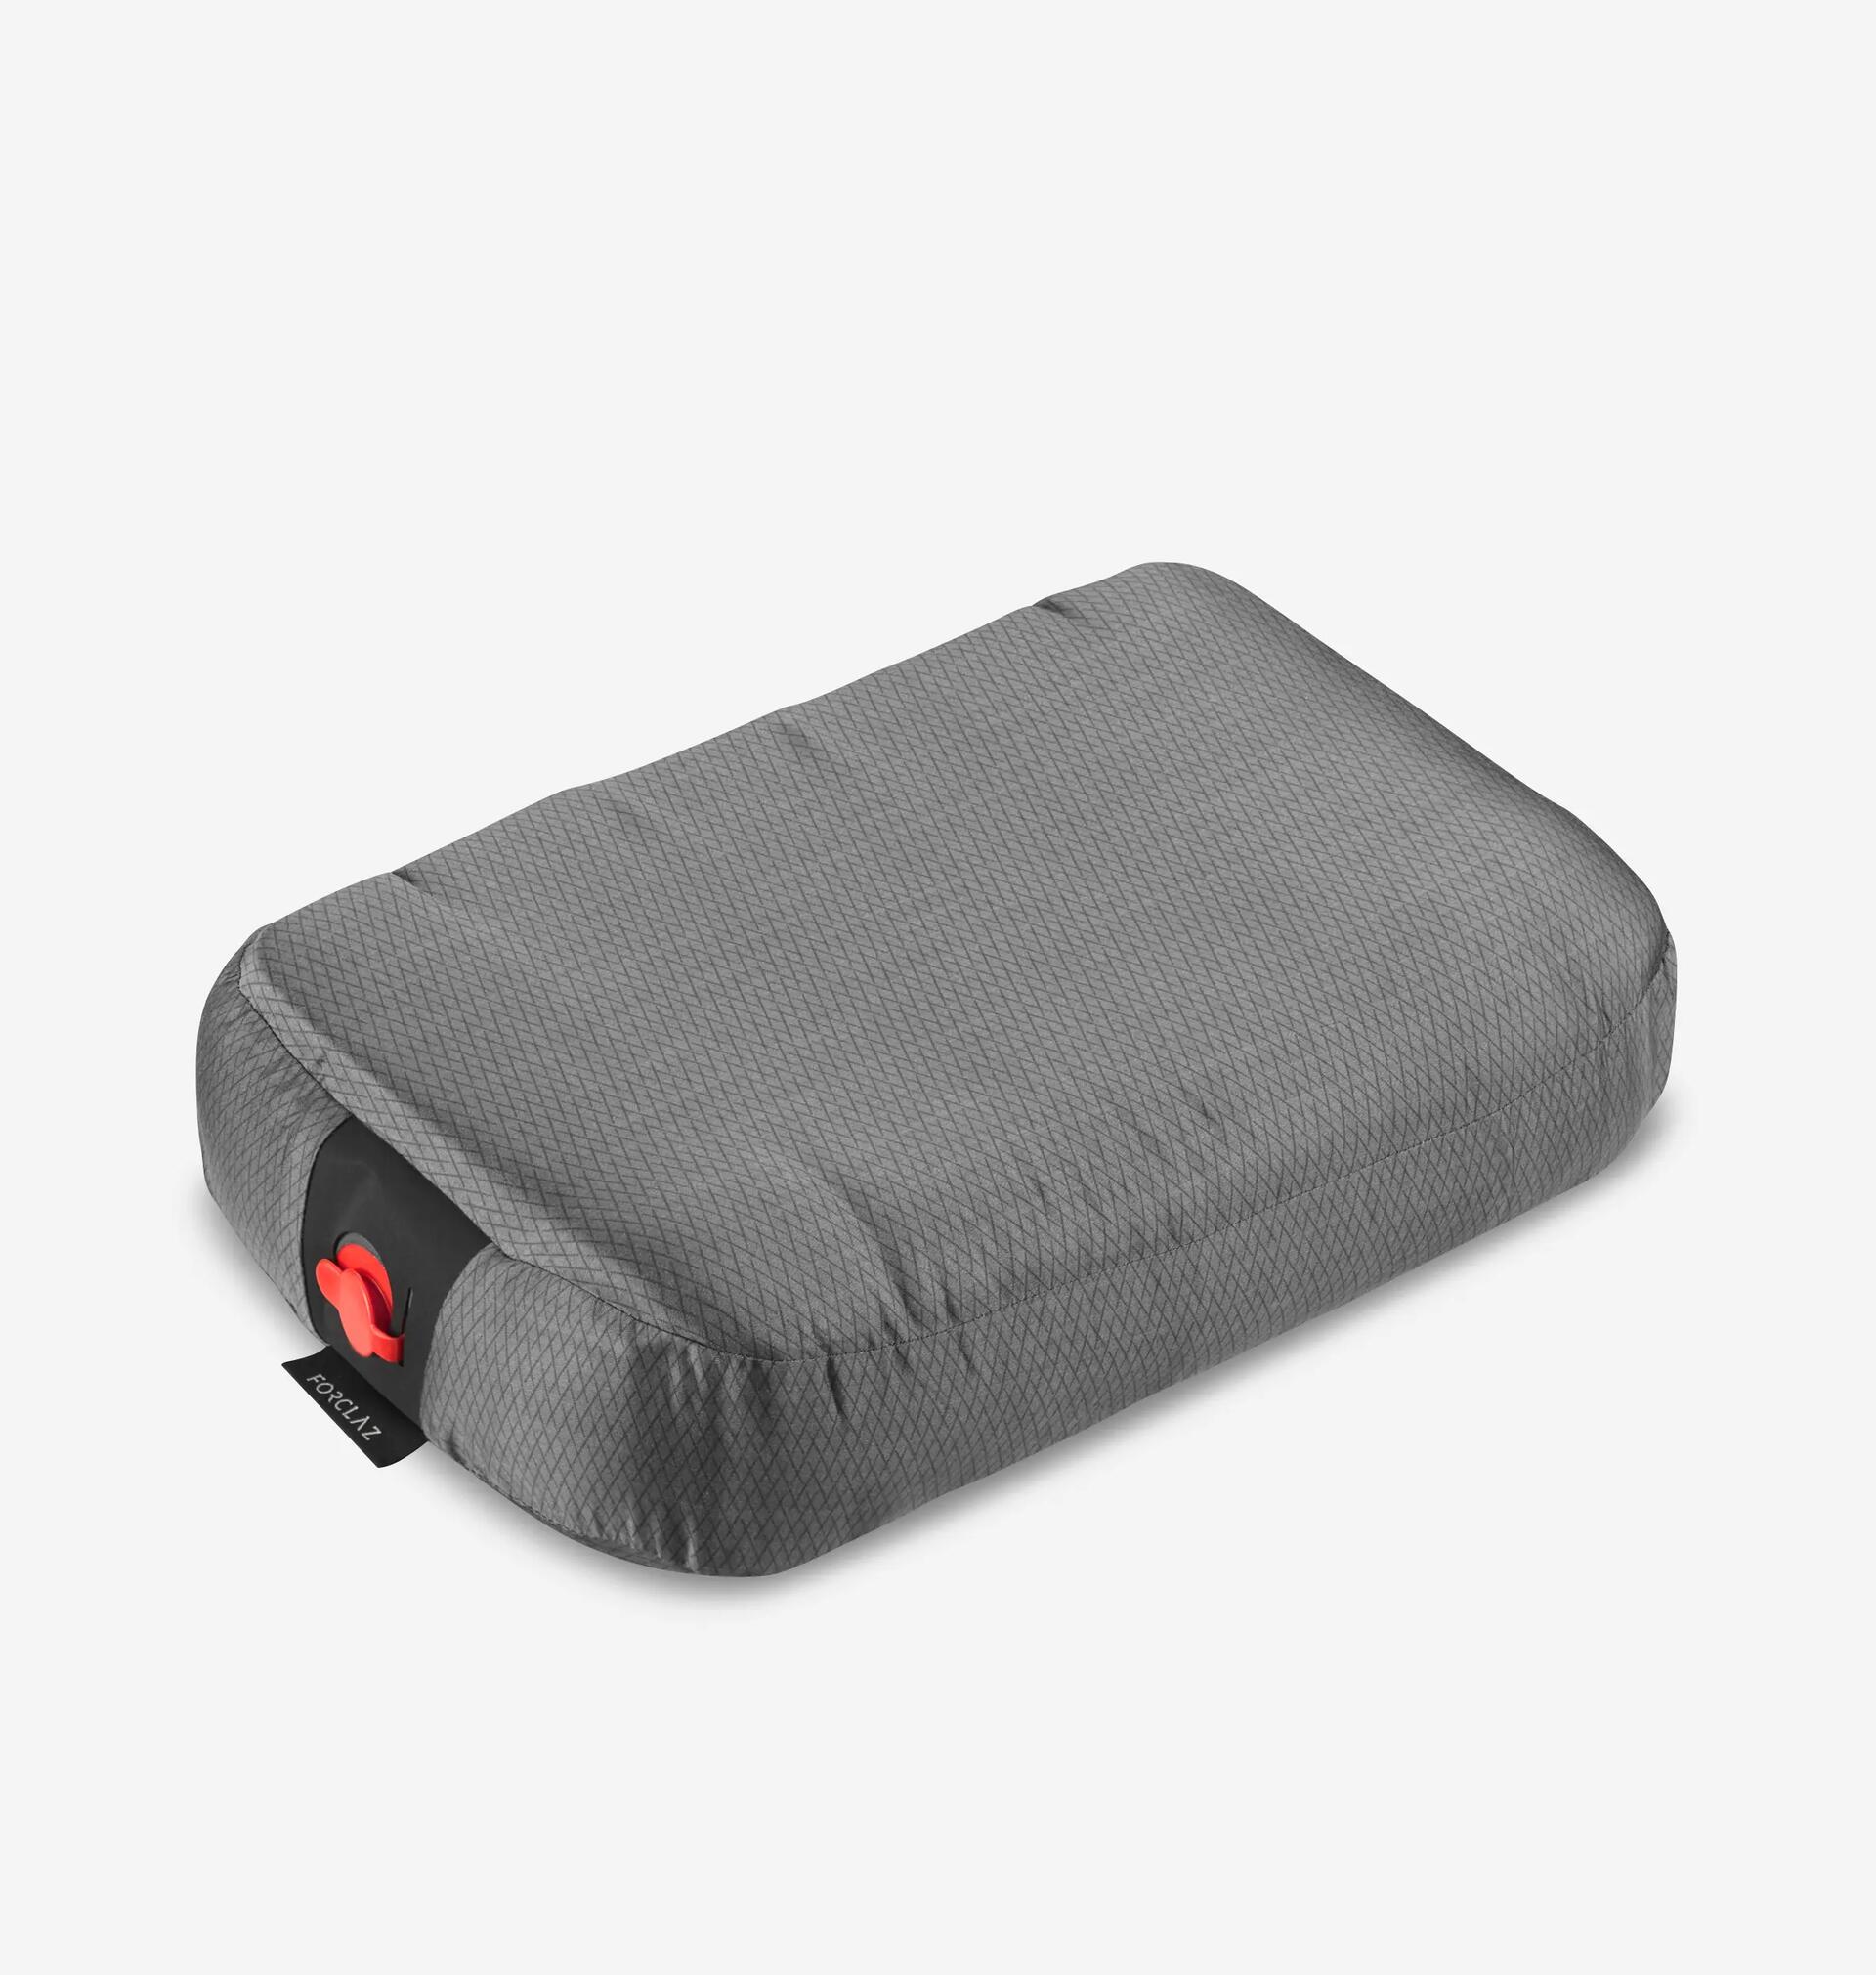 Camping | How do I choose my sleeping bag?